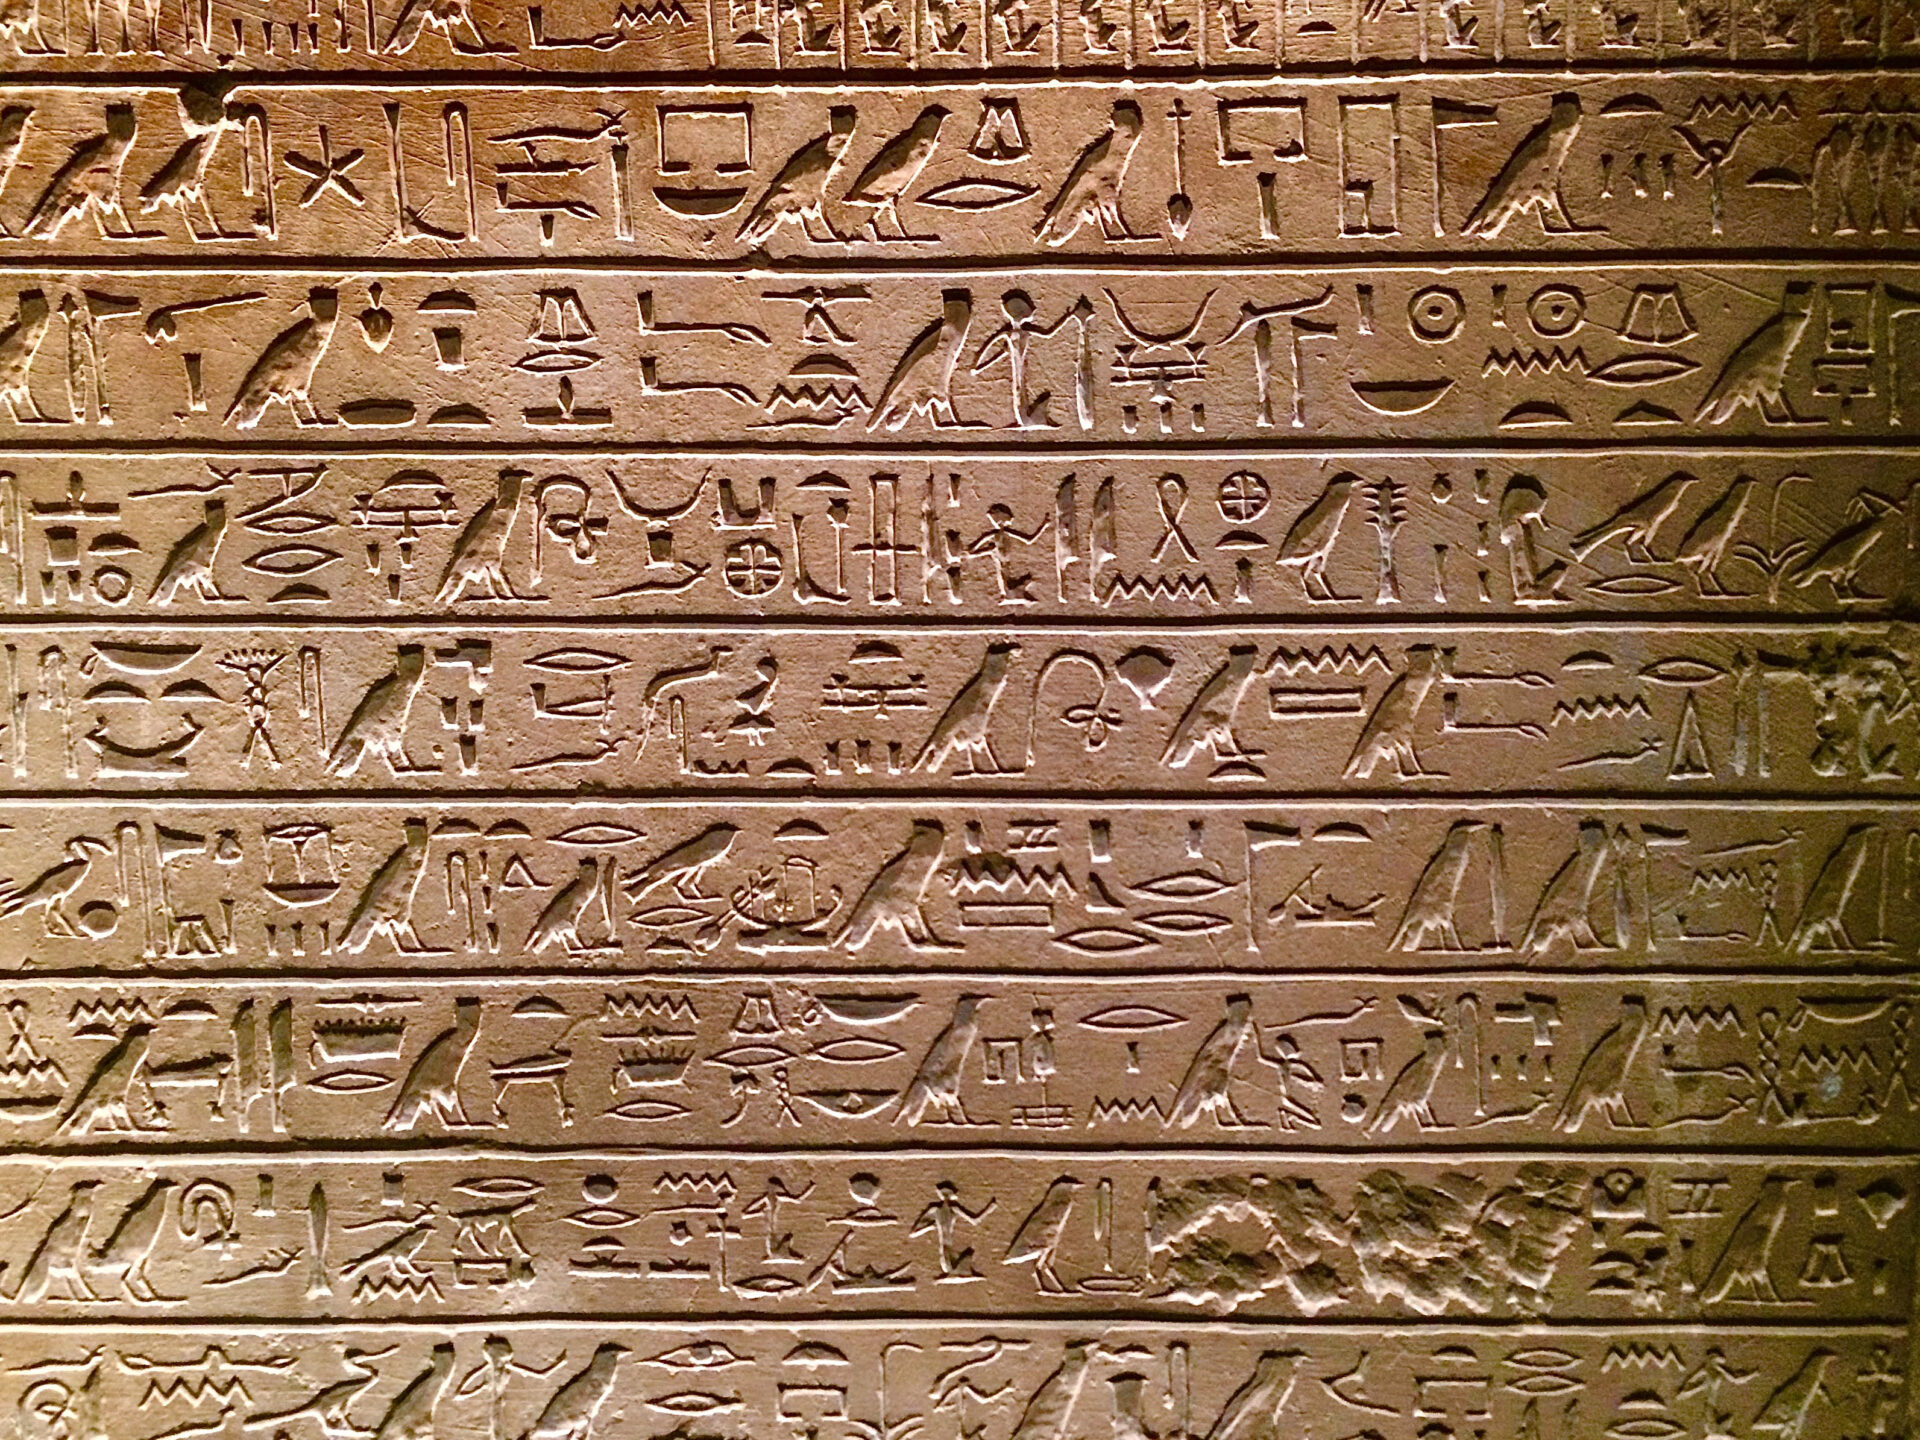 Let’s Investigate Hieroglyphs!